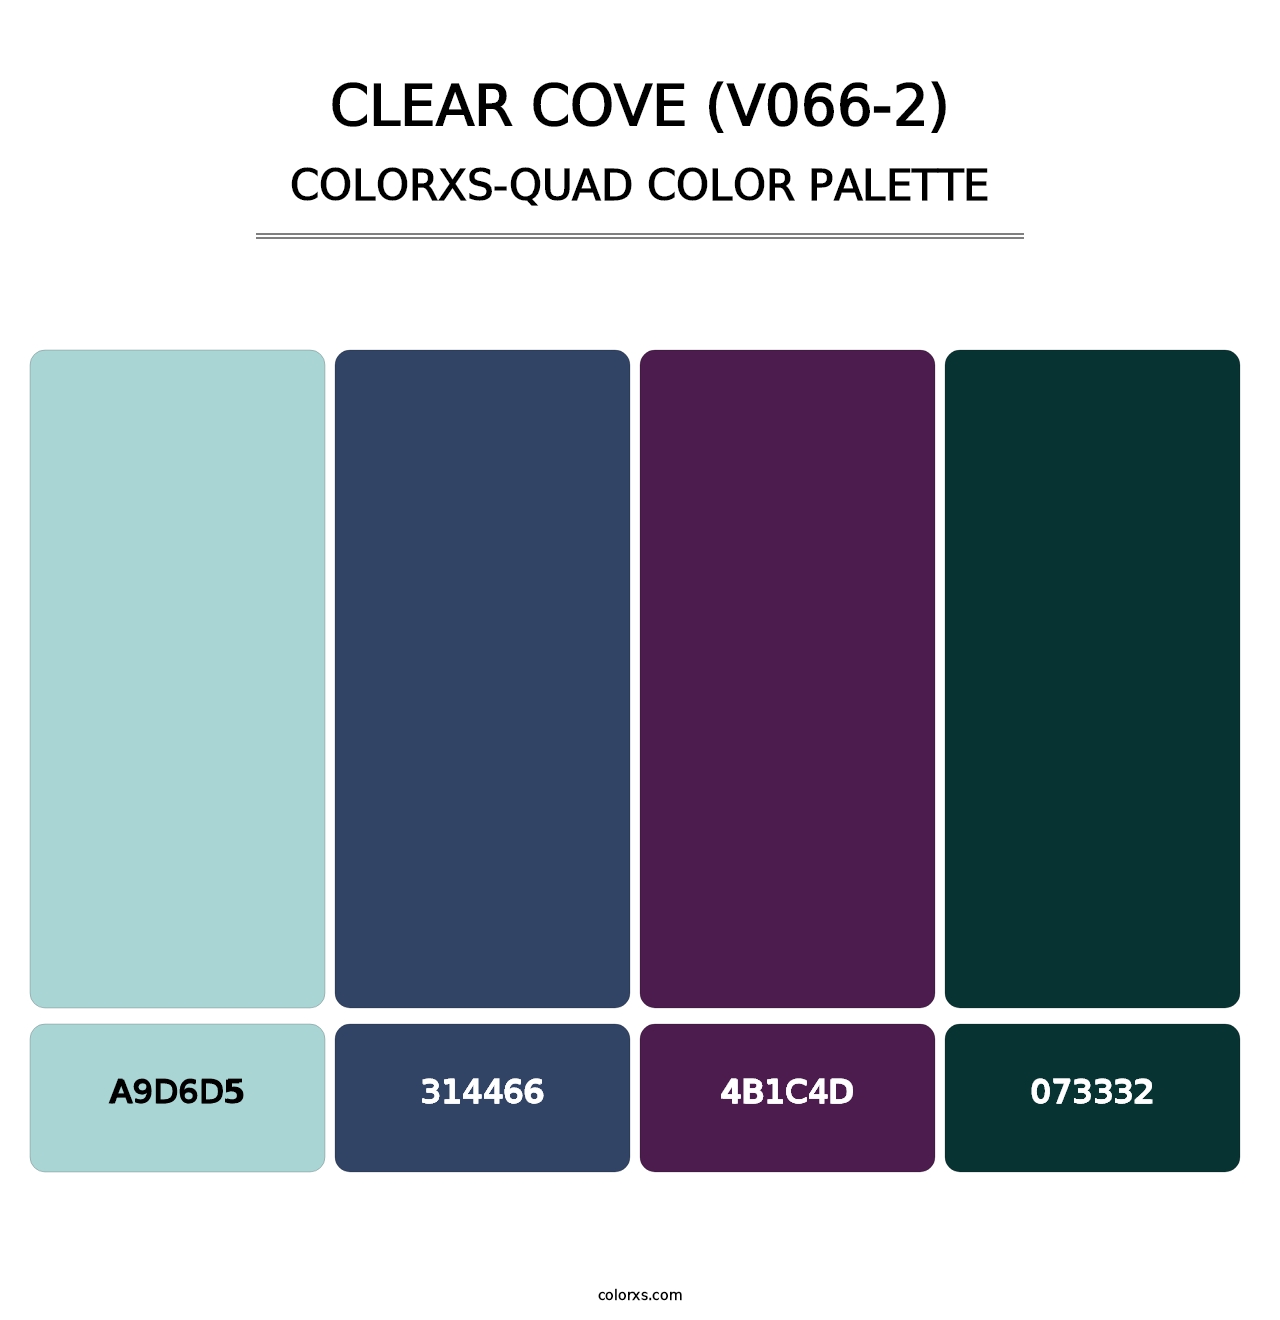 Clear Cove (V066-2) - Colorxs Quad Palette